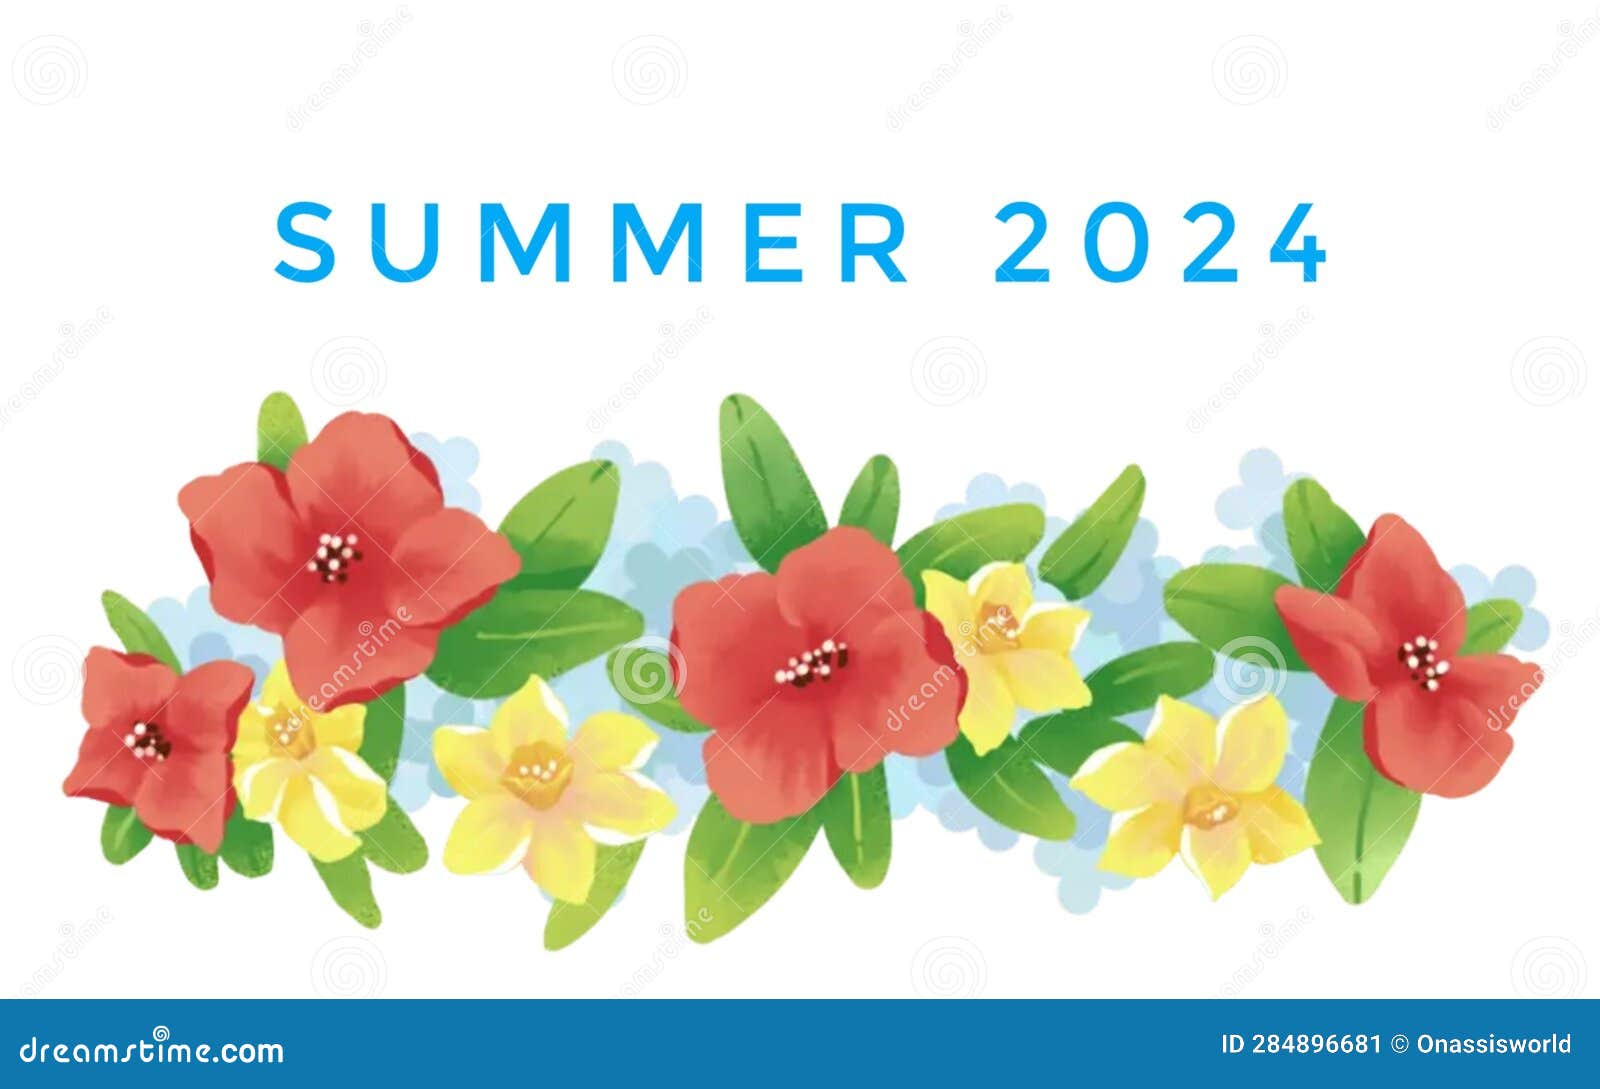 Summer 2024 Abstract Background Illustration Header Stock Illustration